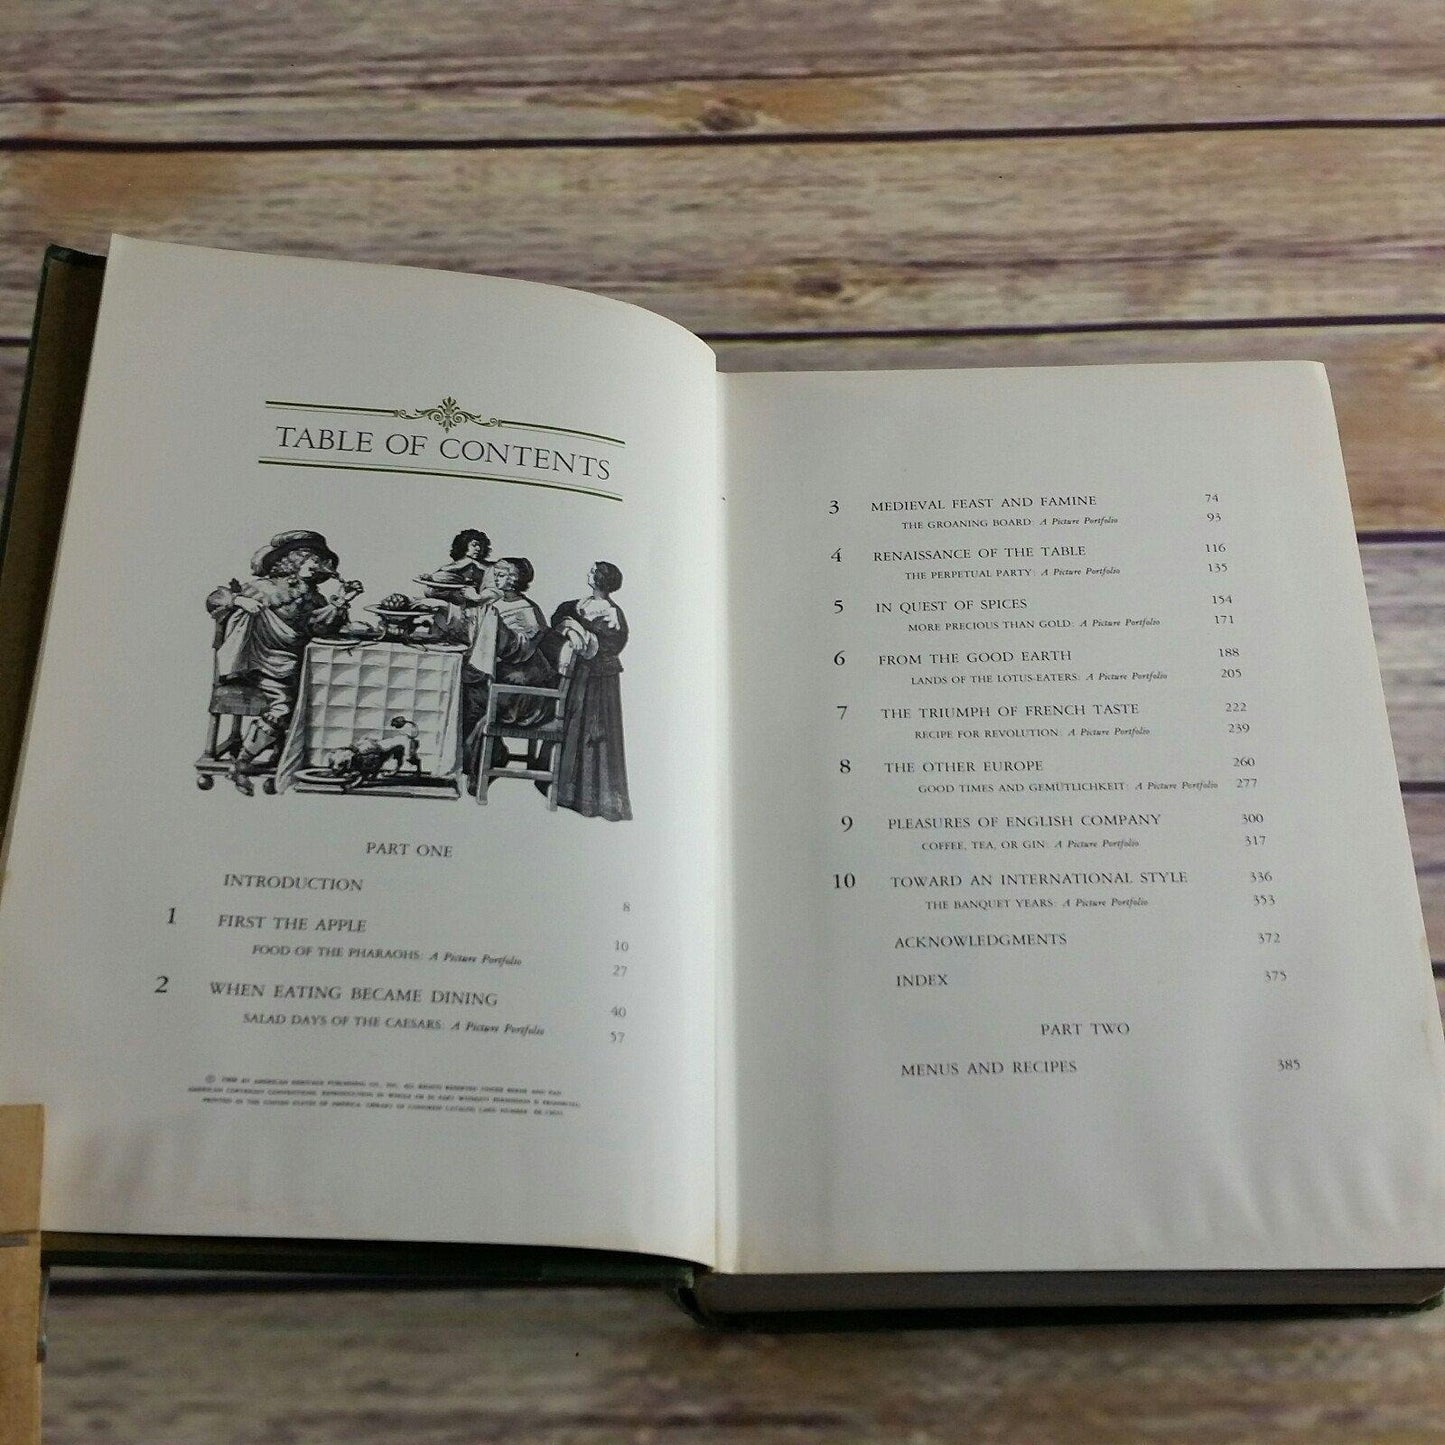 Vintage Cookbook The Horizon Cookbook and Illustrated History 1968 Hardcover 600 International Recipes and Menus William Hale